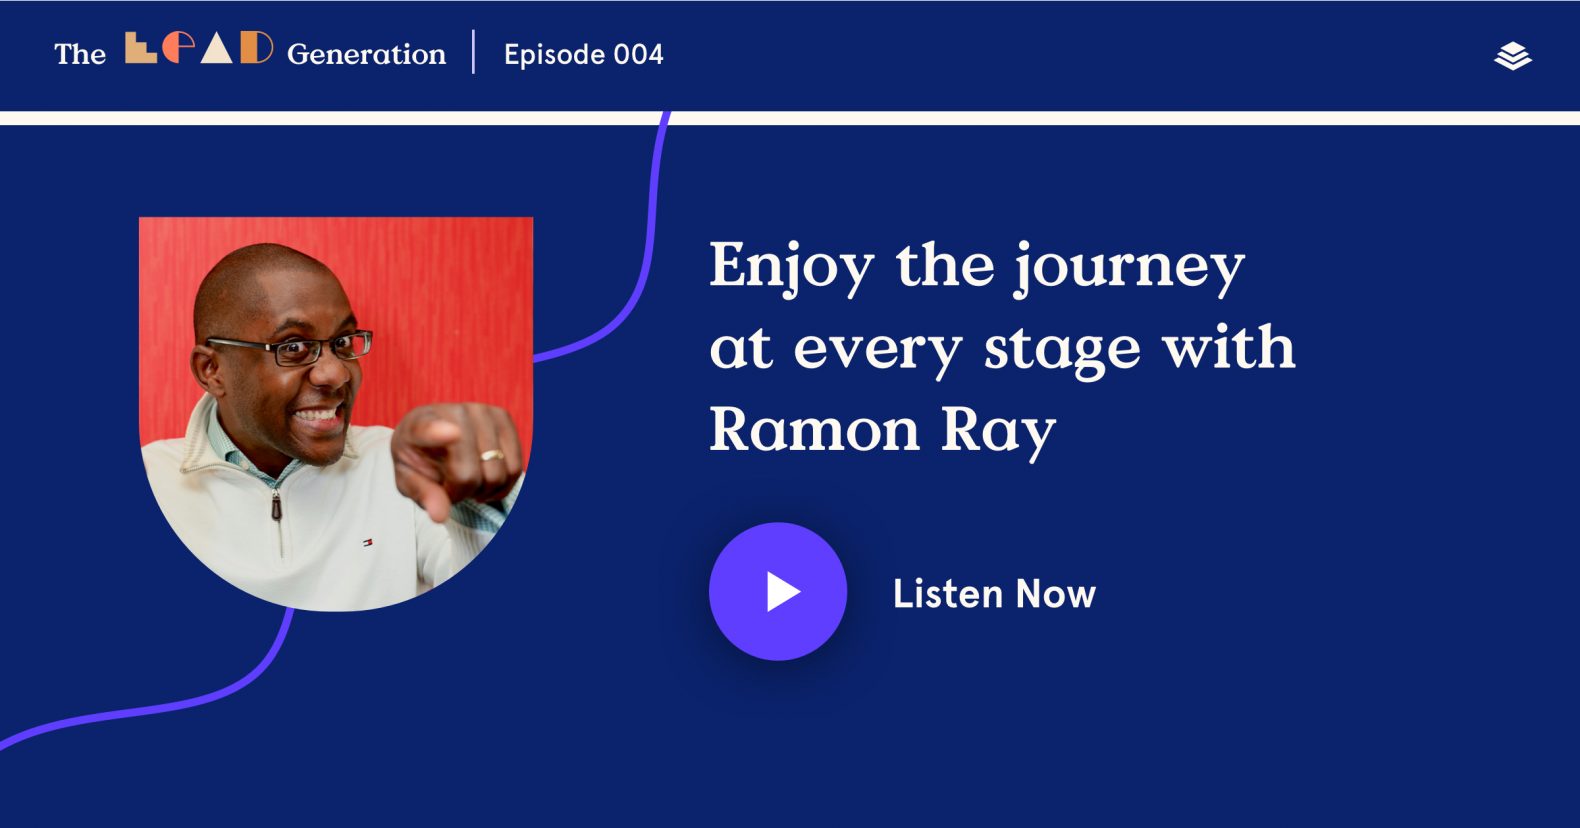 Ramon Ray on The Lead Generation